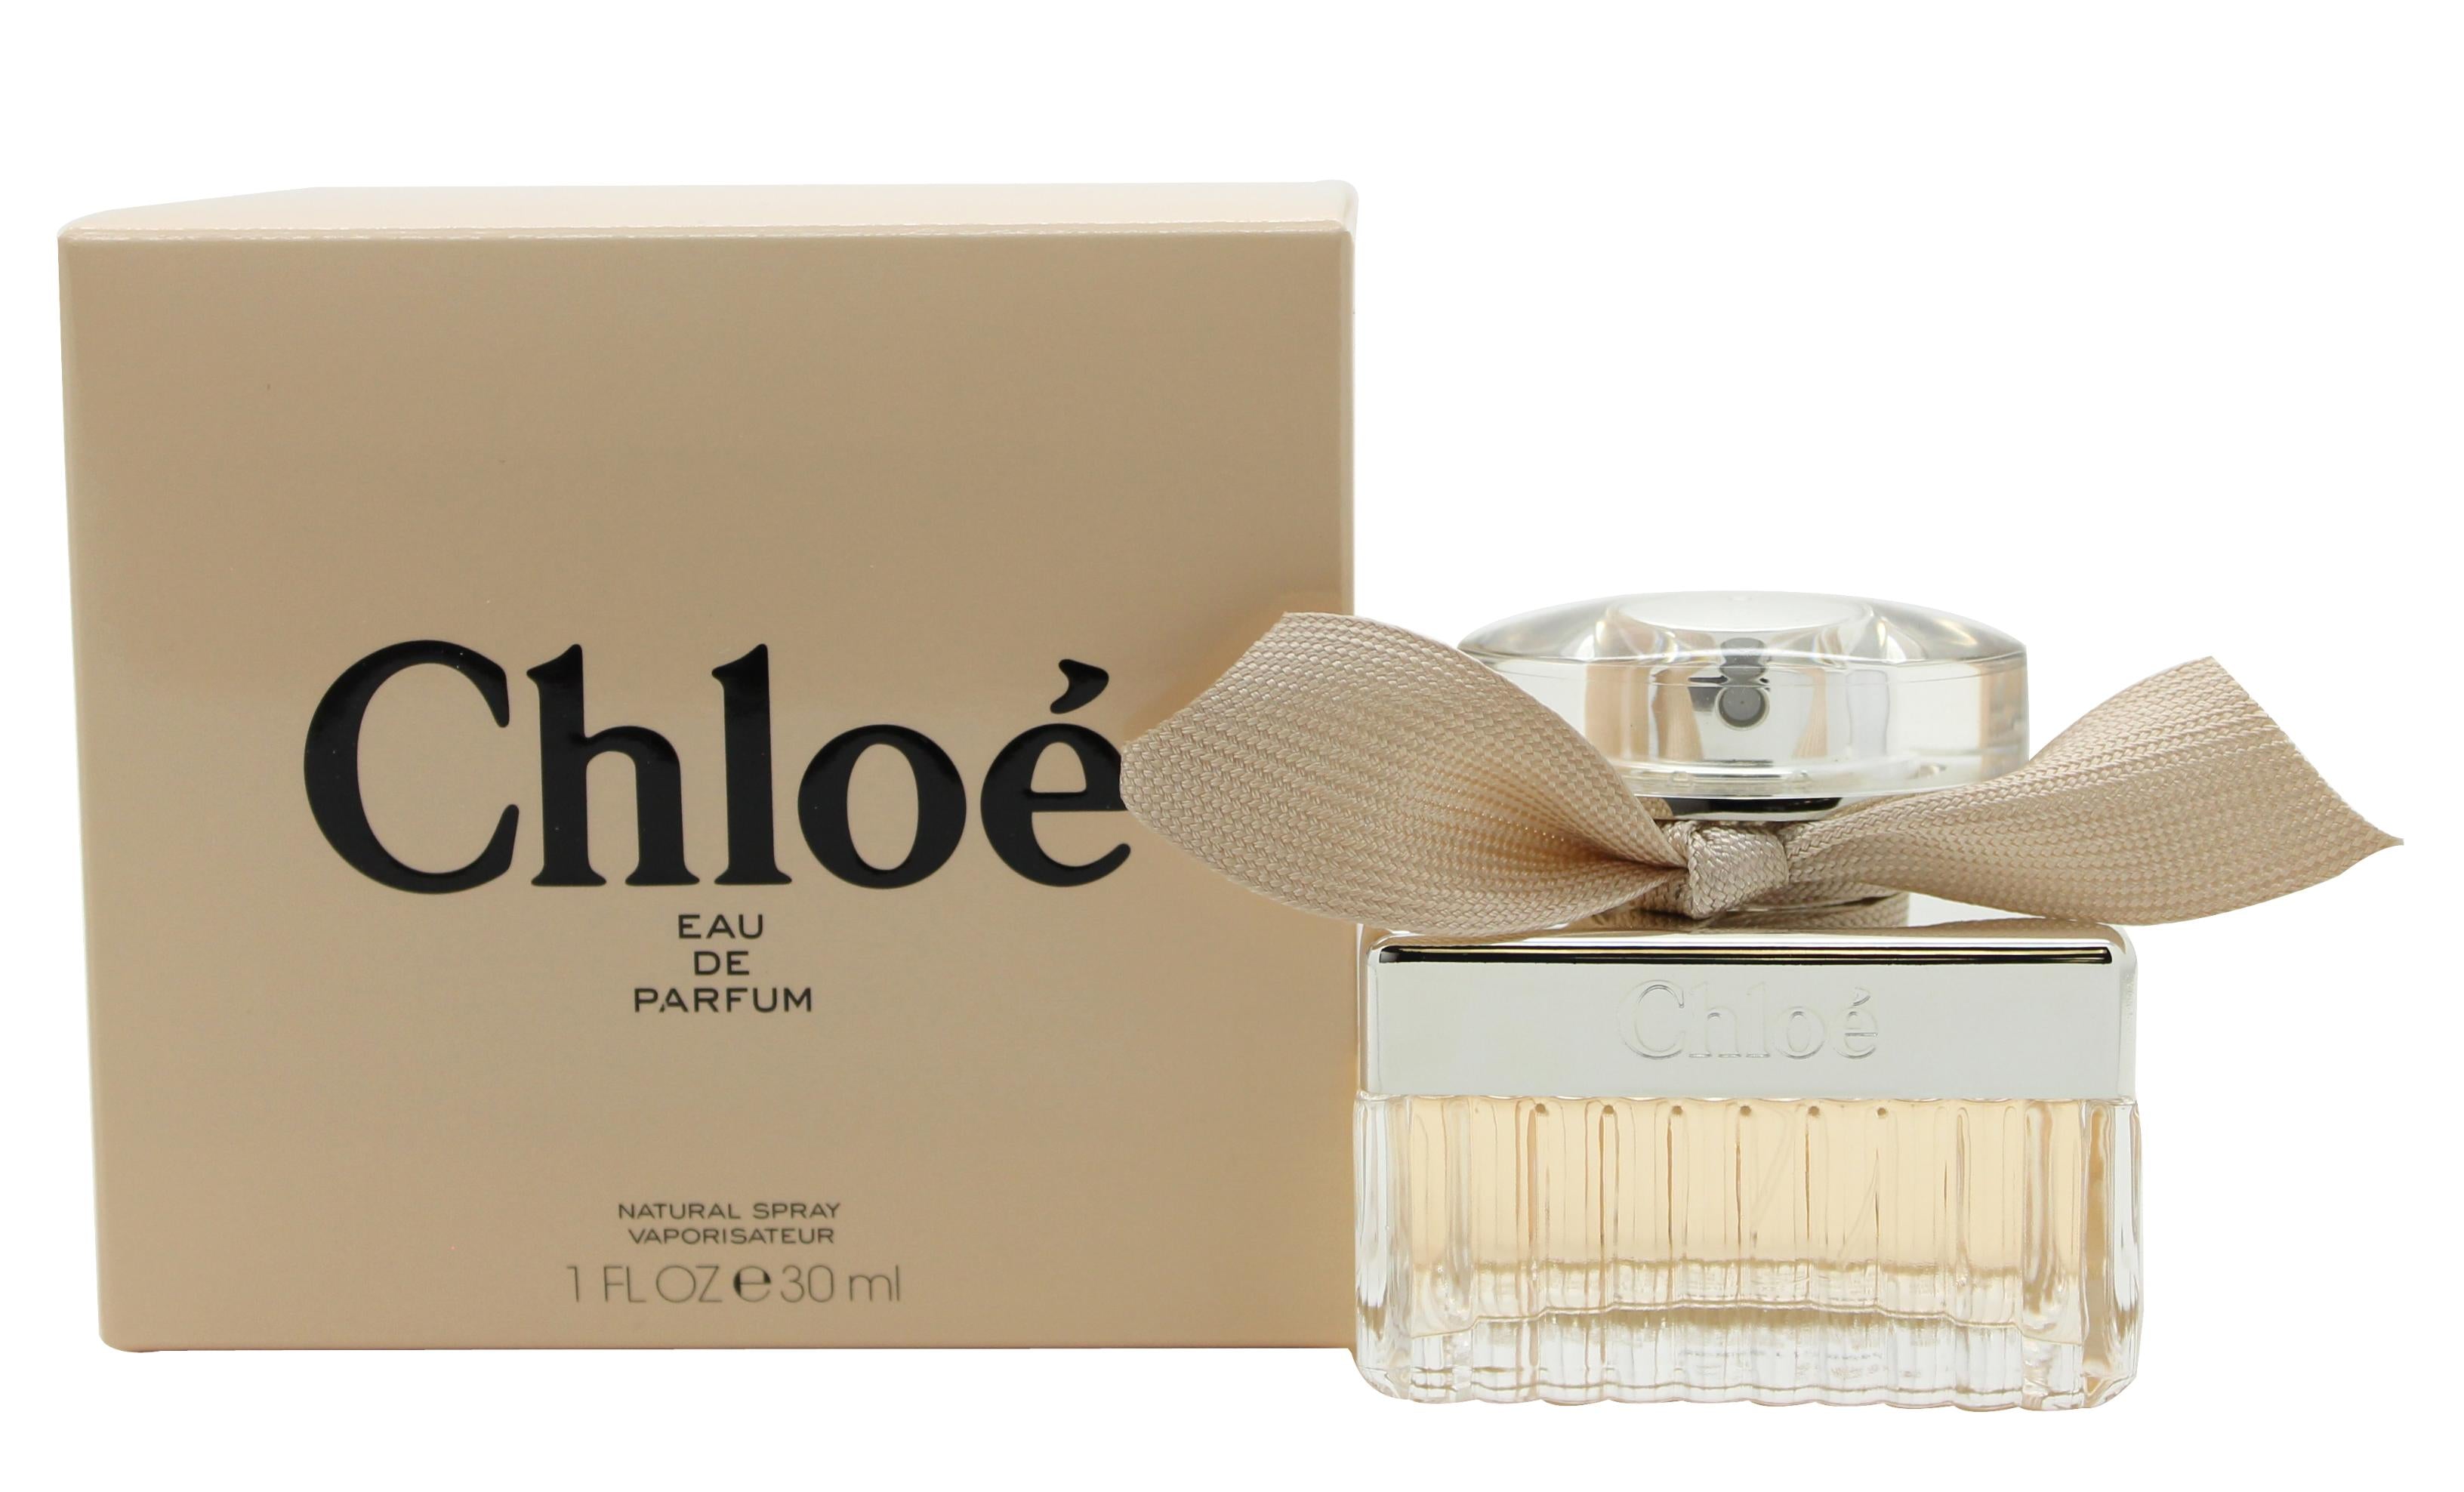 View Chloé Signature Eau de Parfum 30ml Spray information